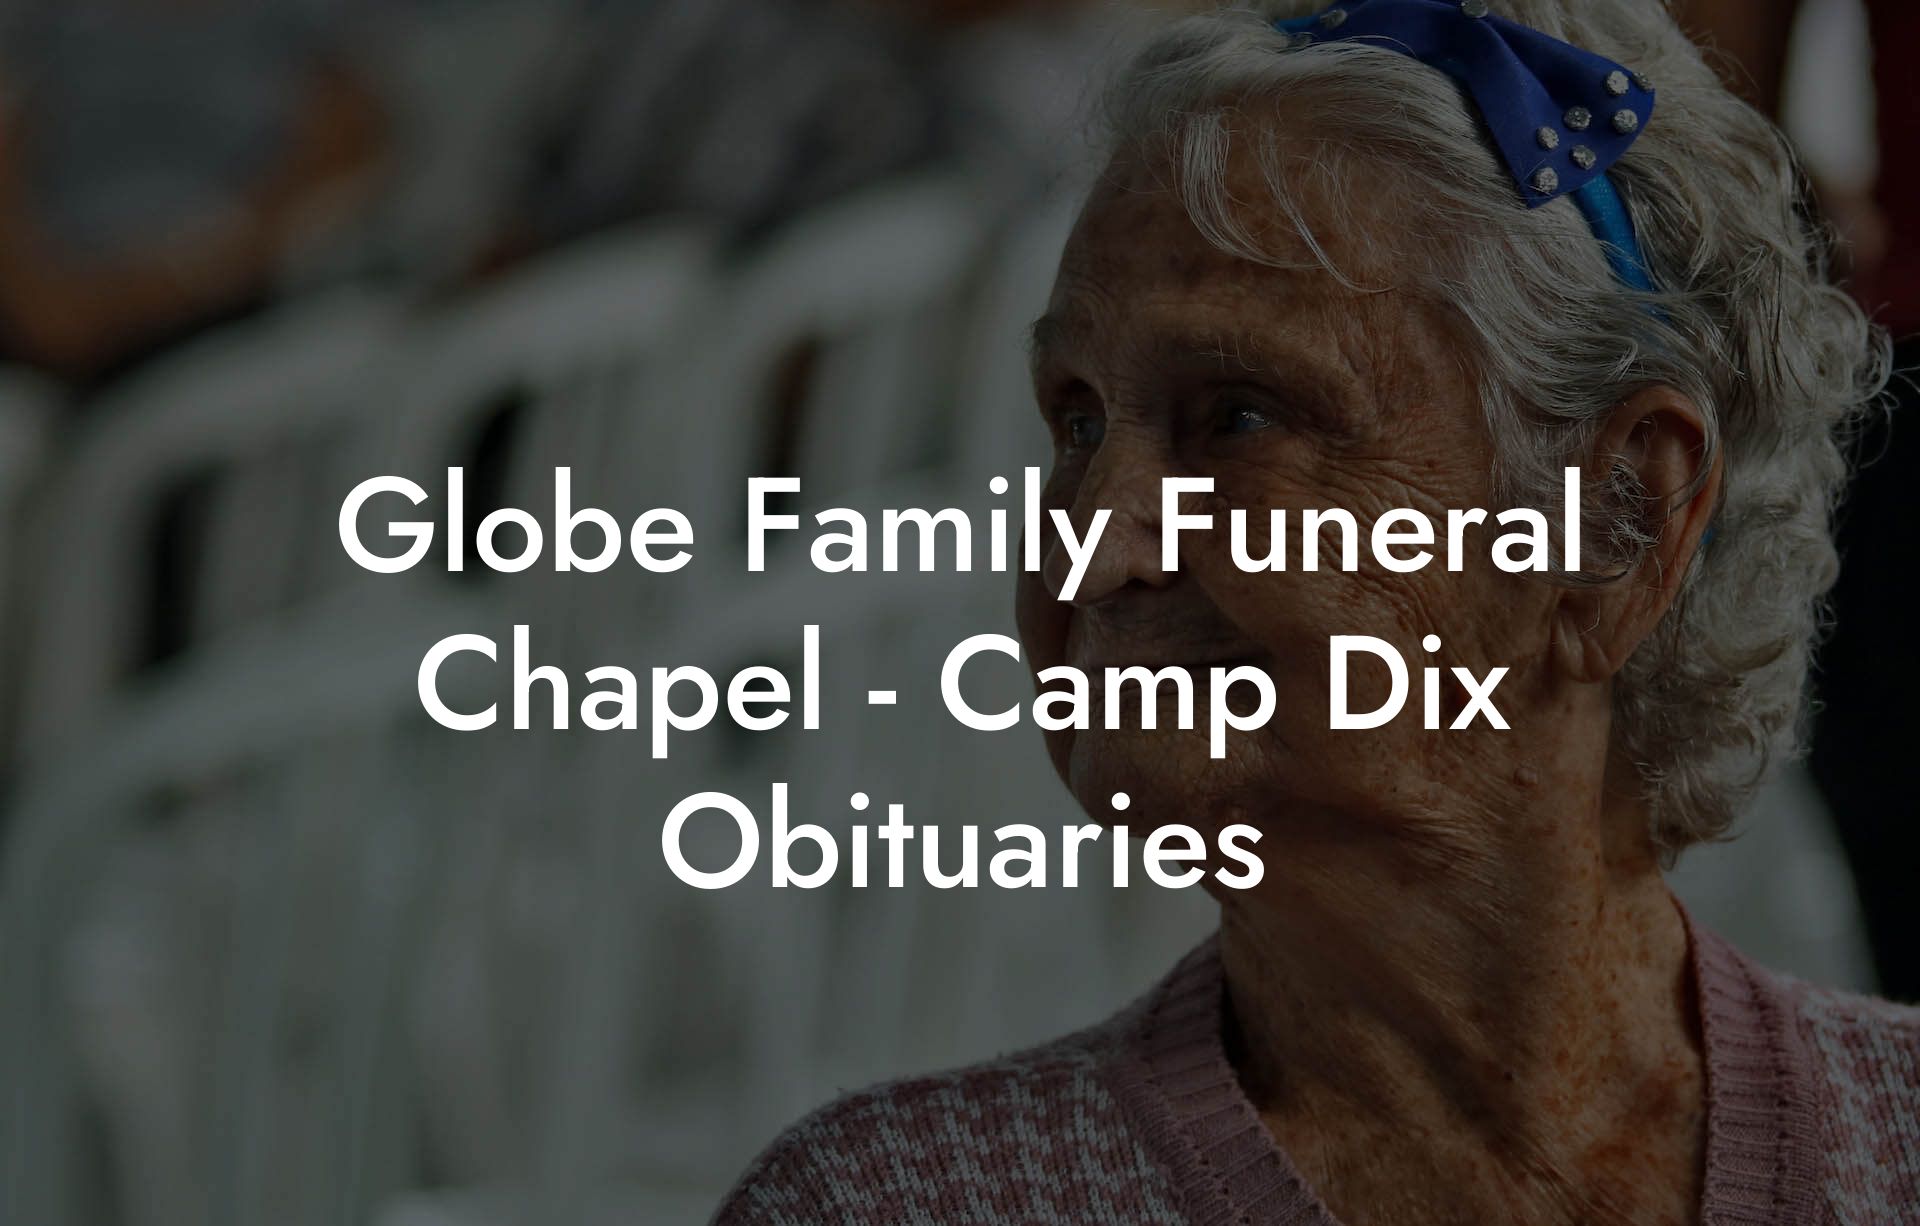 Globe Family Funeral Chapel - Camp Dix Obituaries